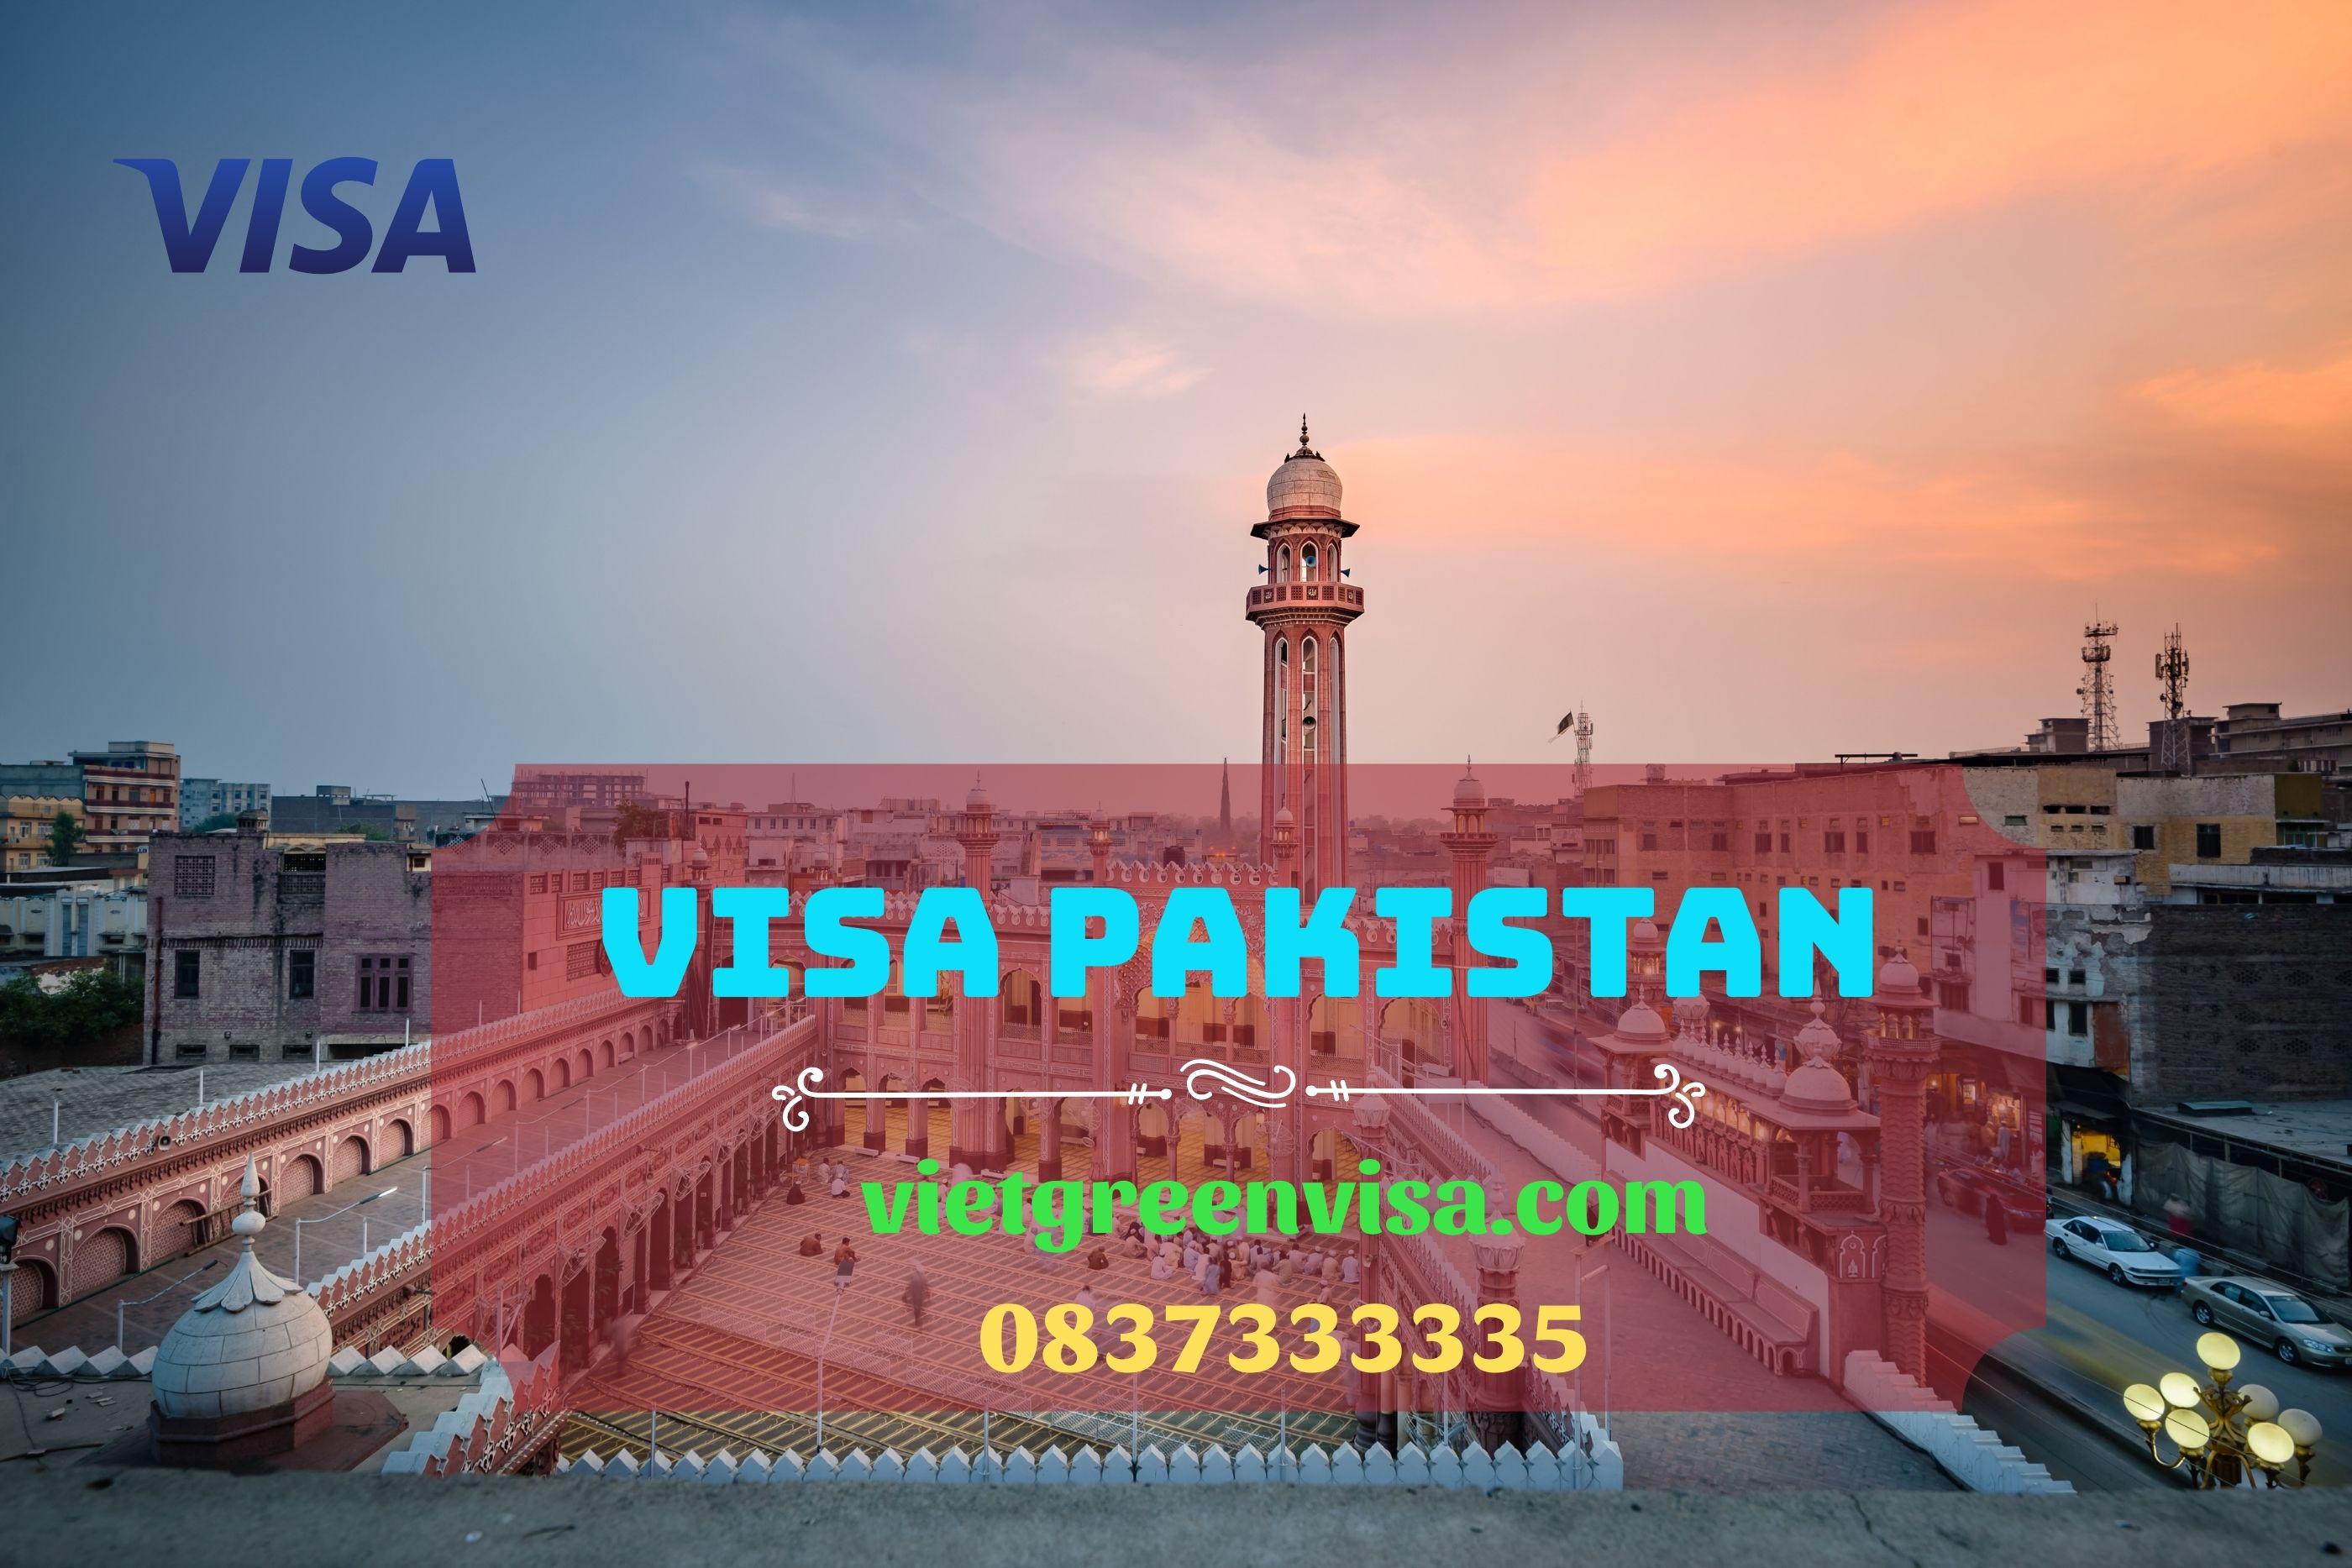 Kinh nghiệm xin visa Pakistan đạt kết quả cao